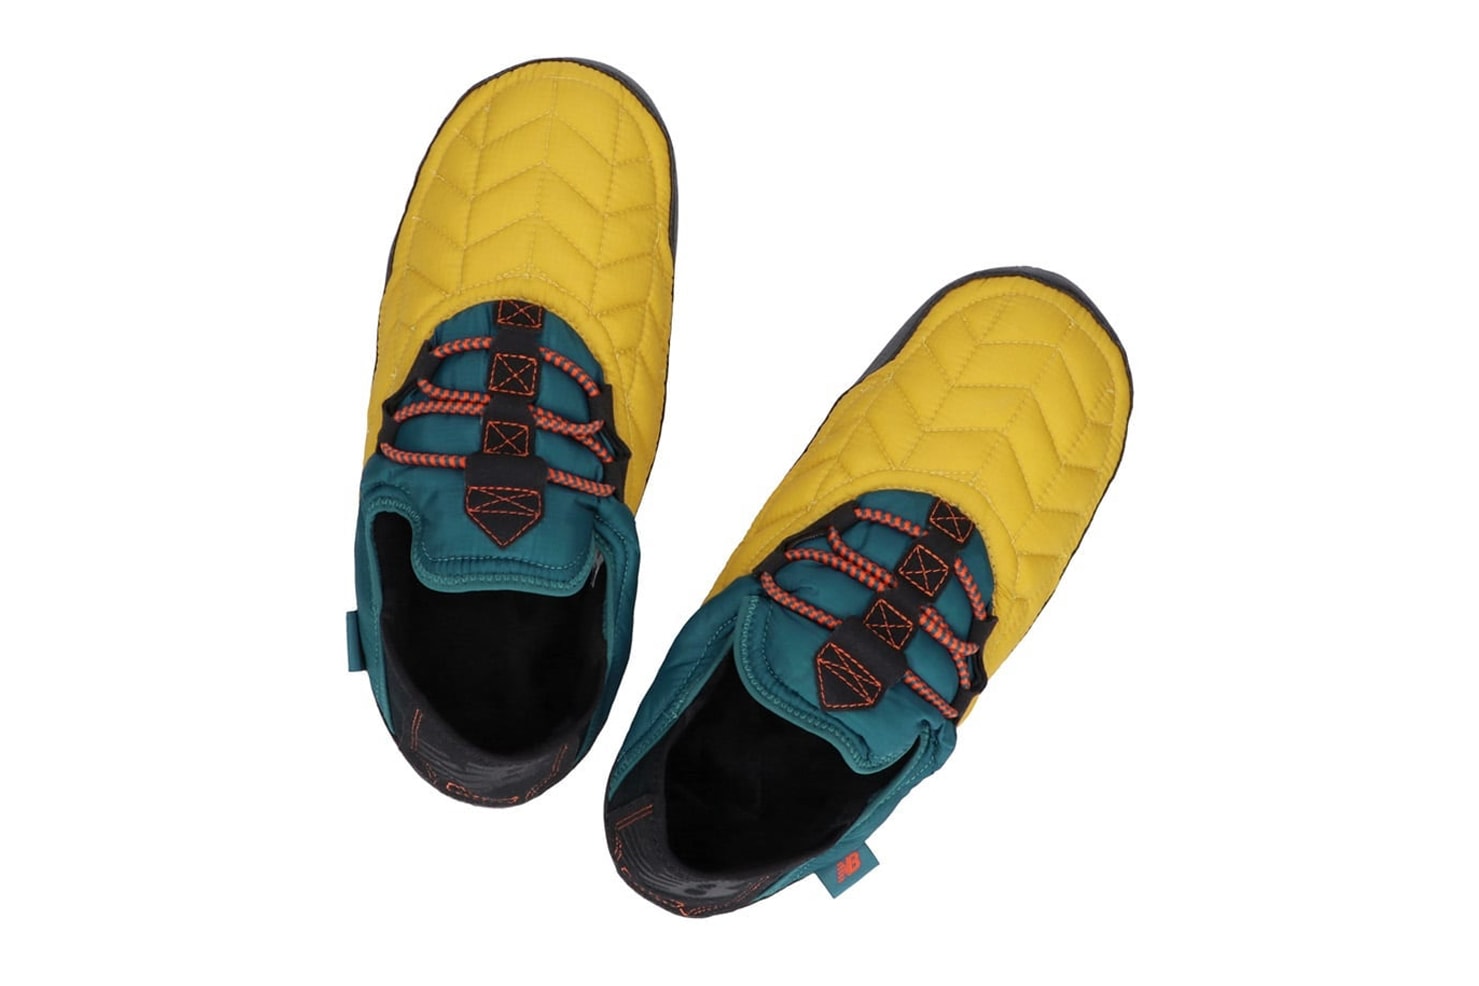 New Balance Caravan Moc Low X2 Footwear SUFMOCX2 green camo yellow green zebra winter slippers release info 